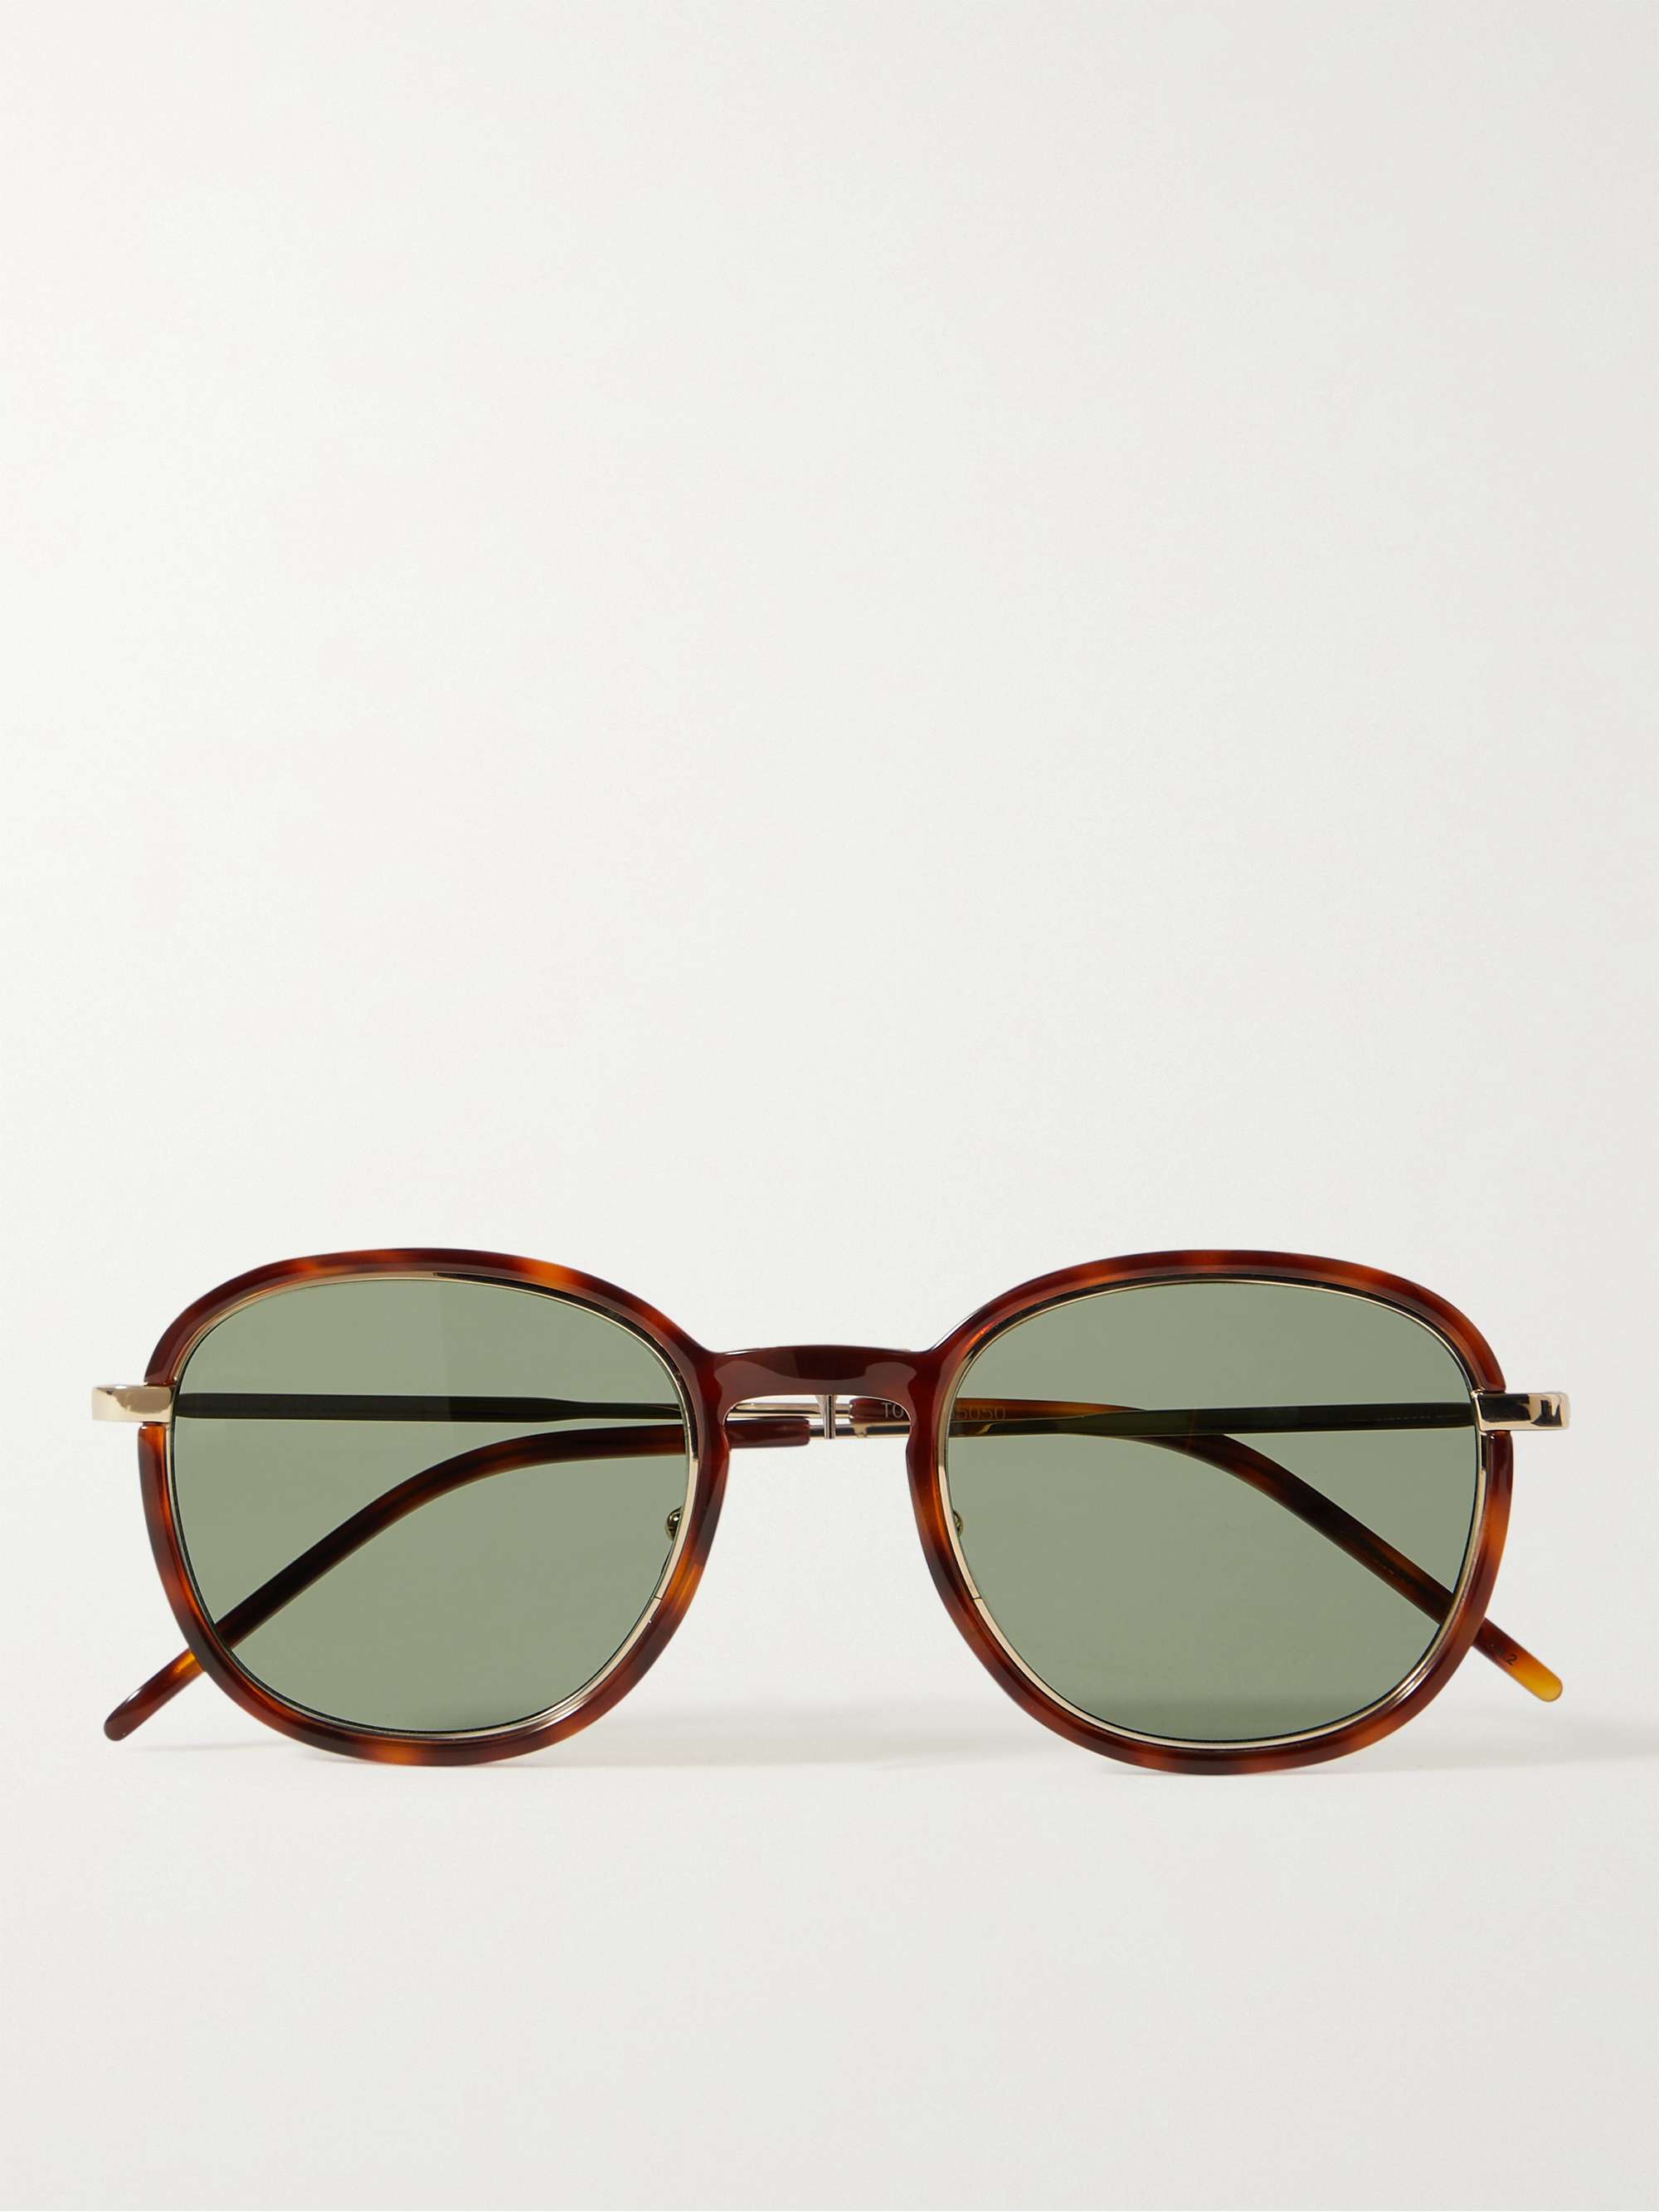 SAINT LAURENT EYEWEAR Round-Frame Tortoiseshell Acetate and Gold-Tone Sunglasses